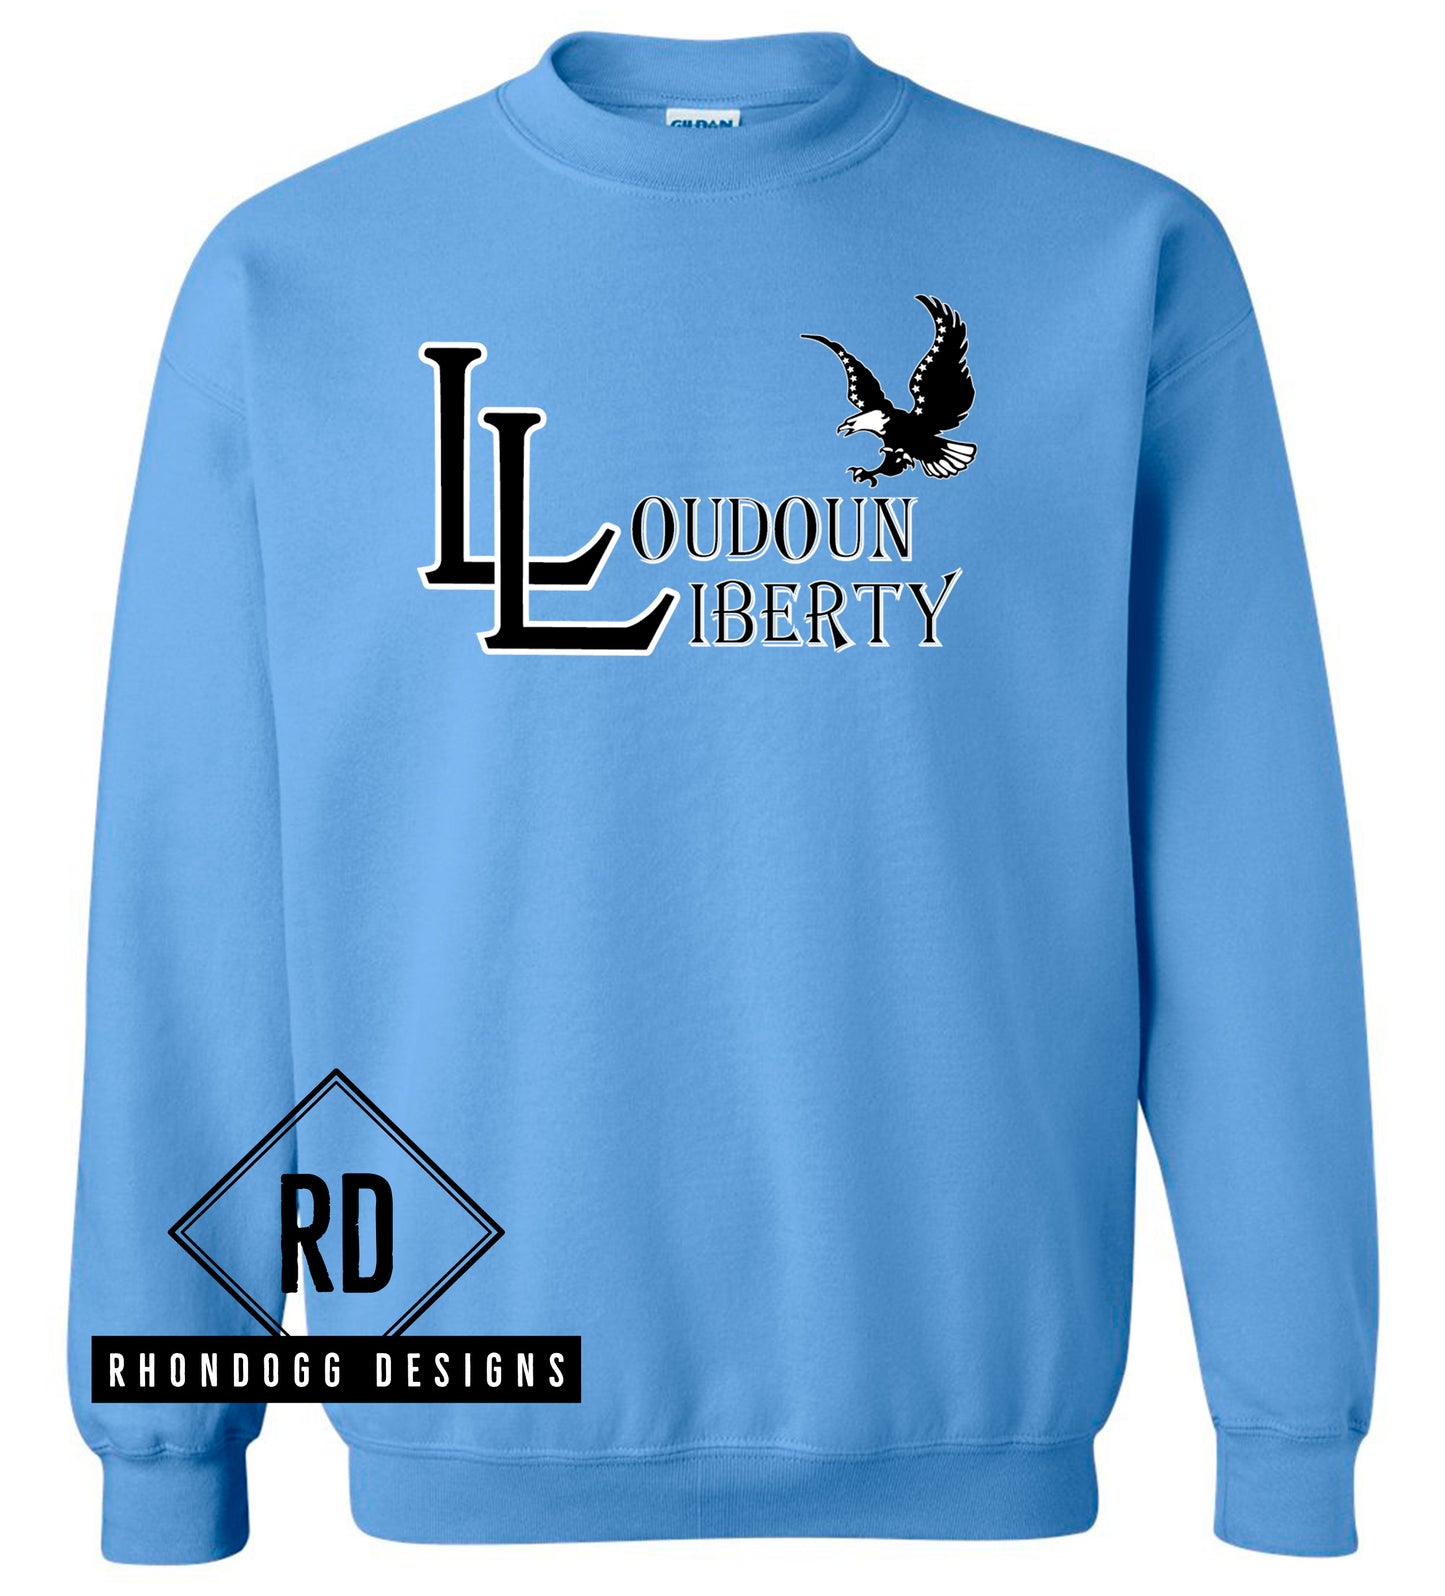 Loudoun Liberty Crewneck Sweatshirt